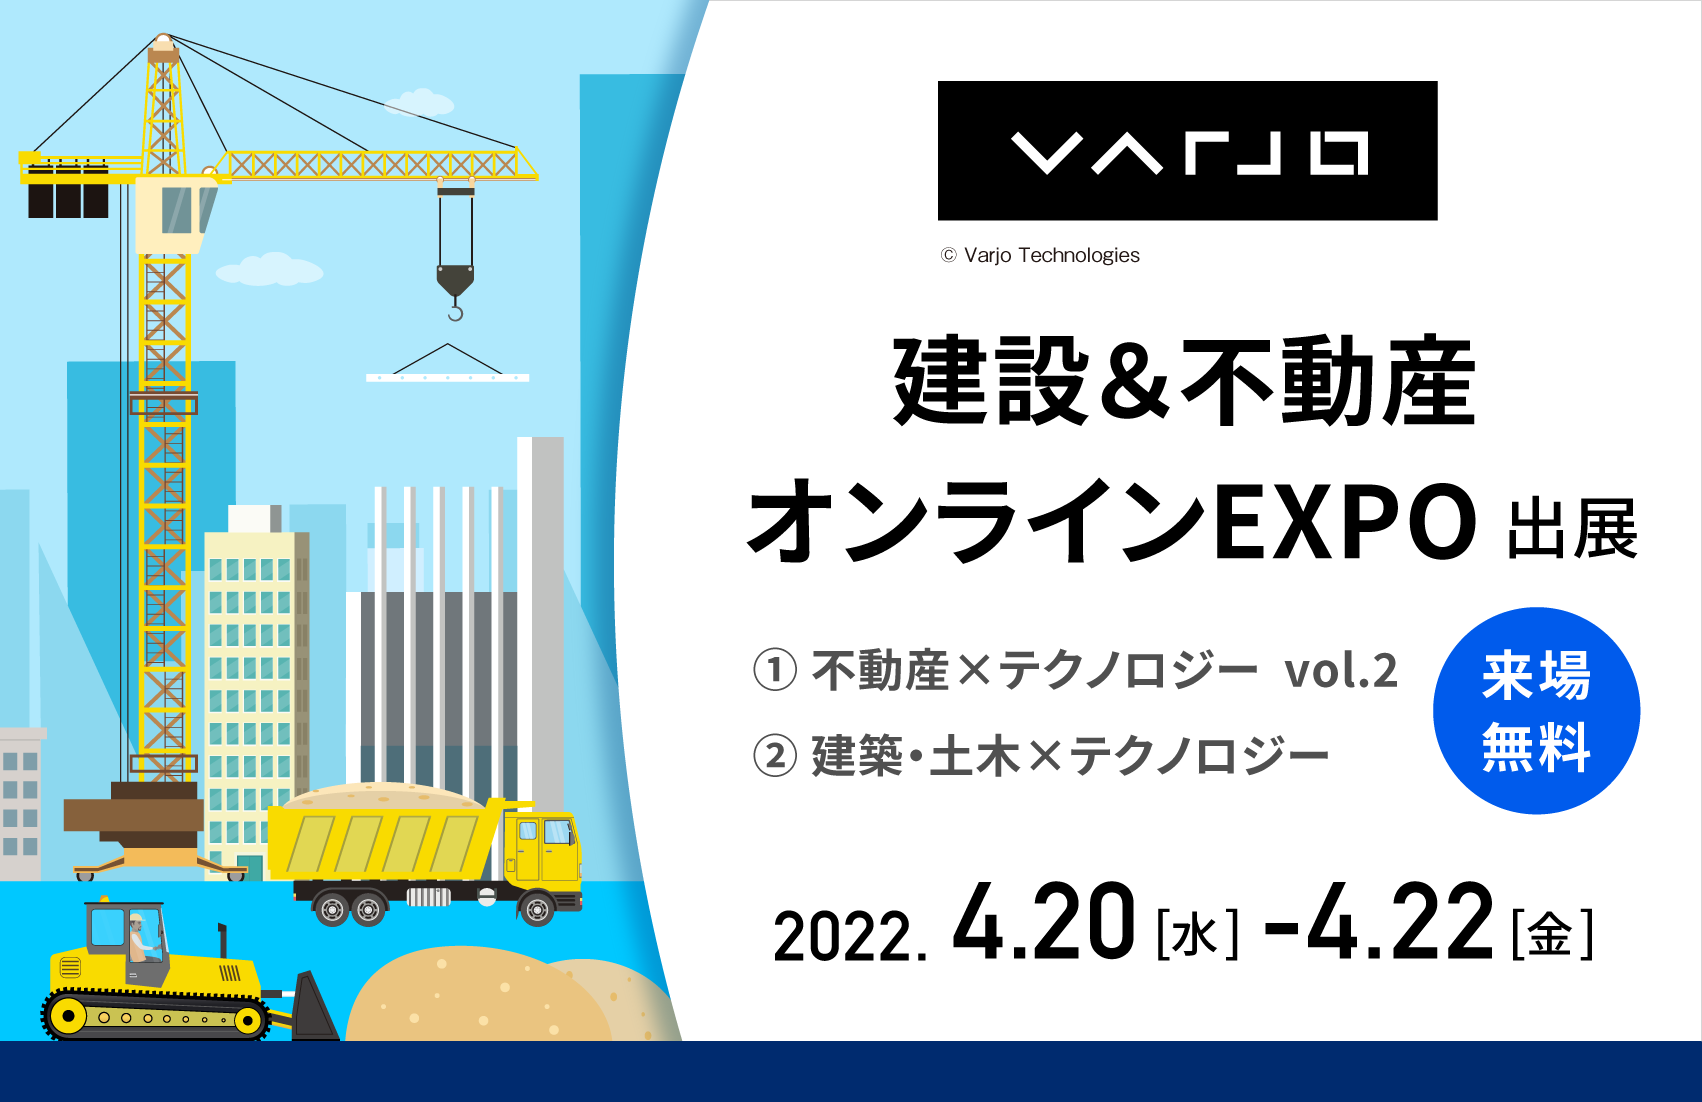  Varjo XR-3を「建設＆不動産オンラインEXPO」に出展いたします